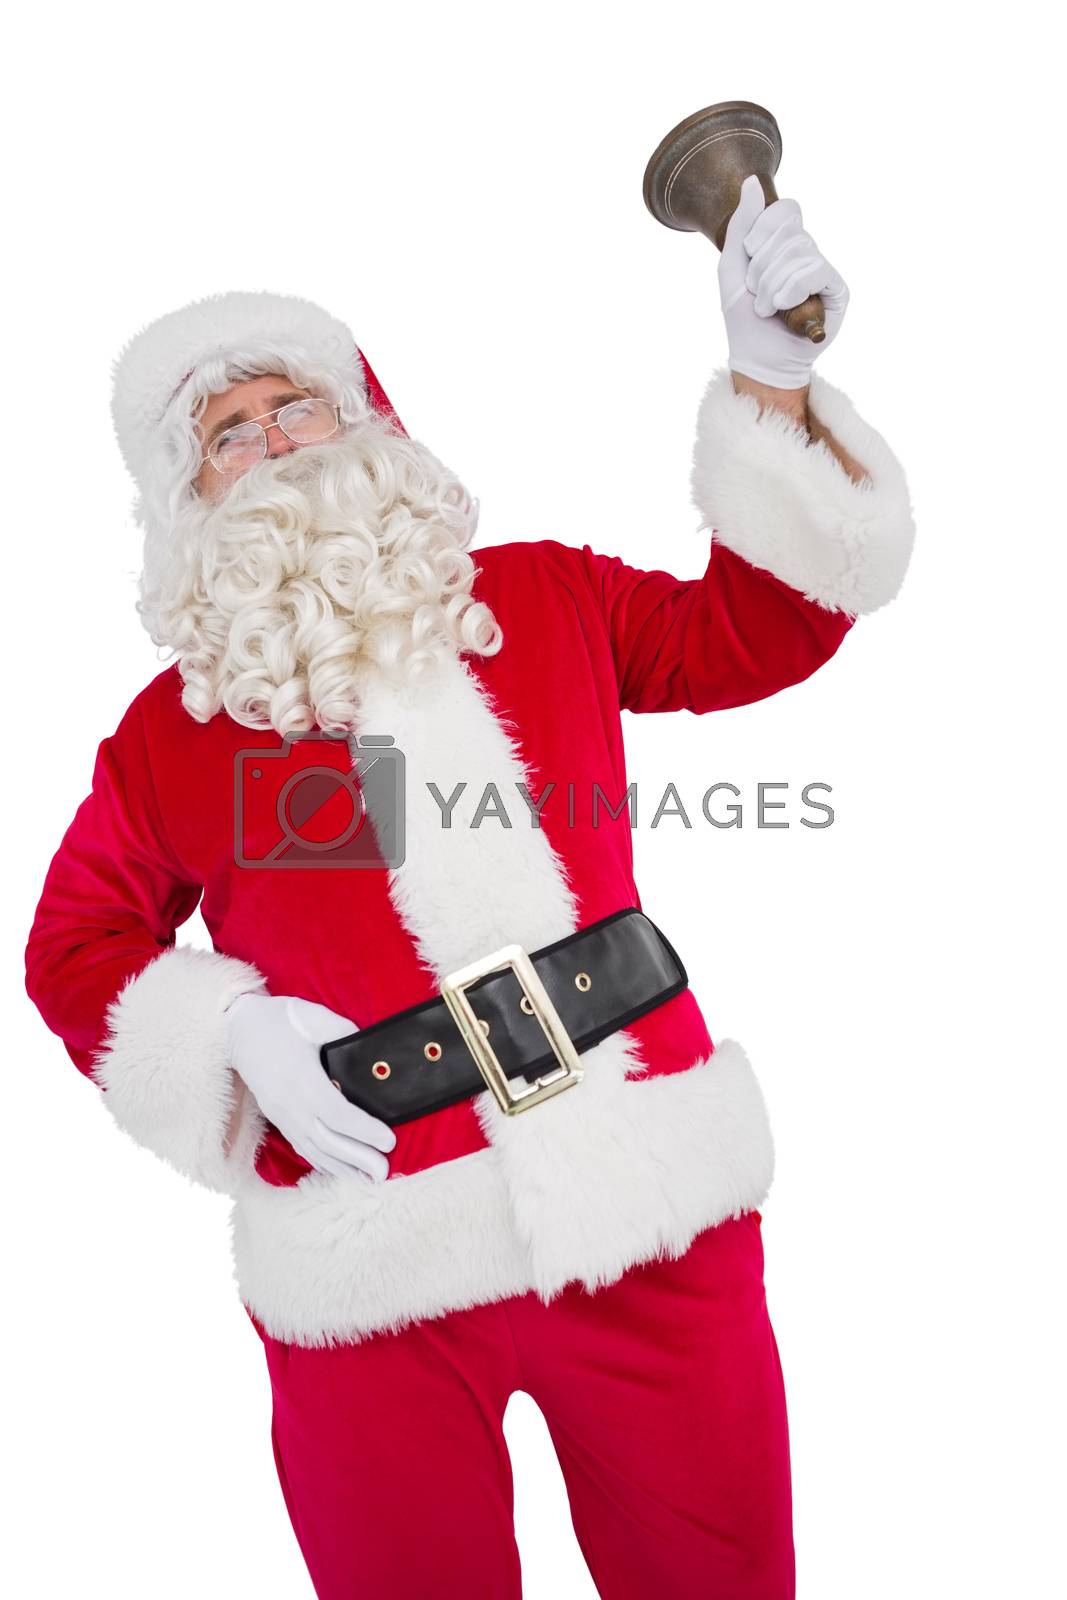 Royalty free image of Happy santa ringing a bell by Wavebreakmedia